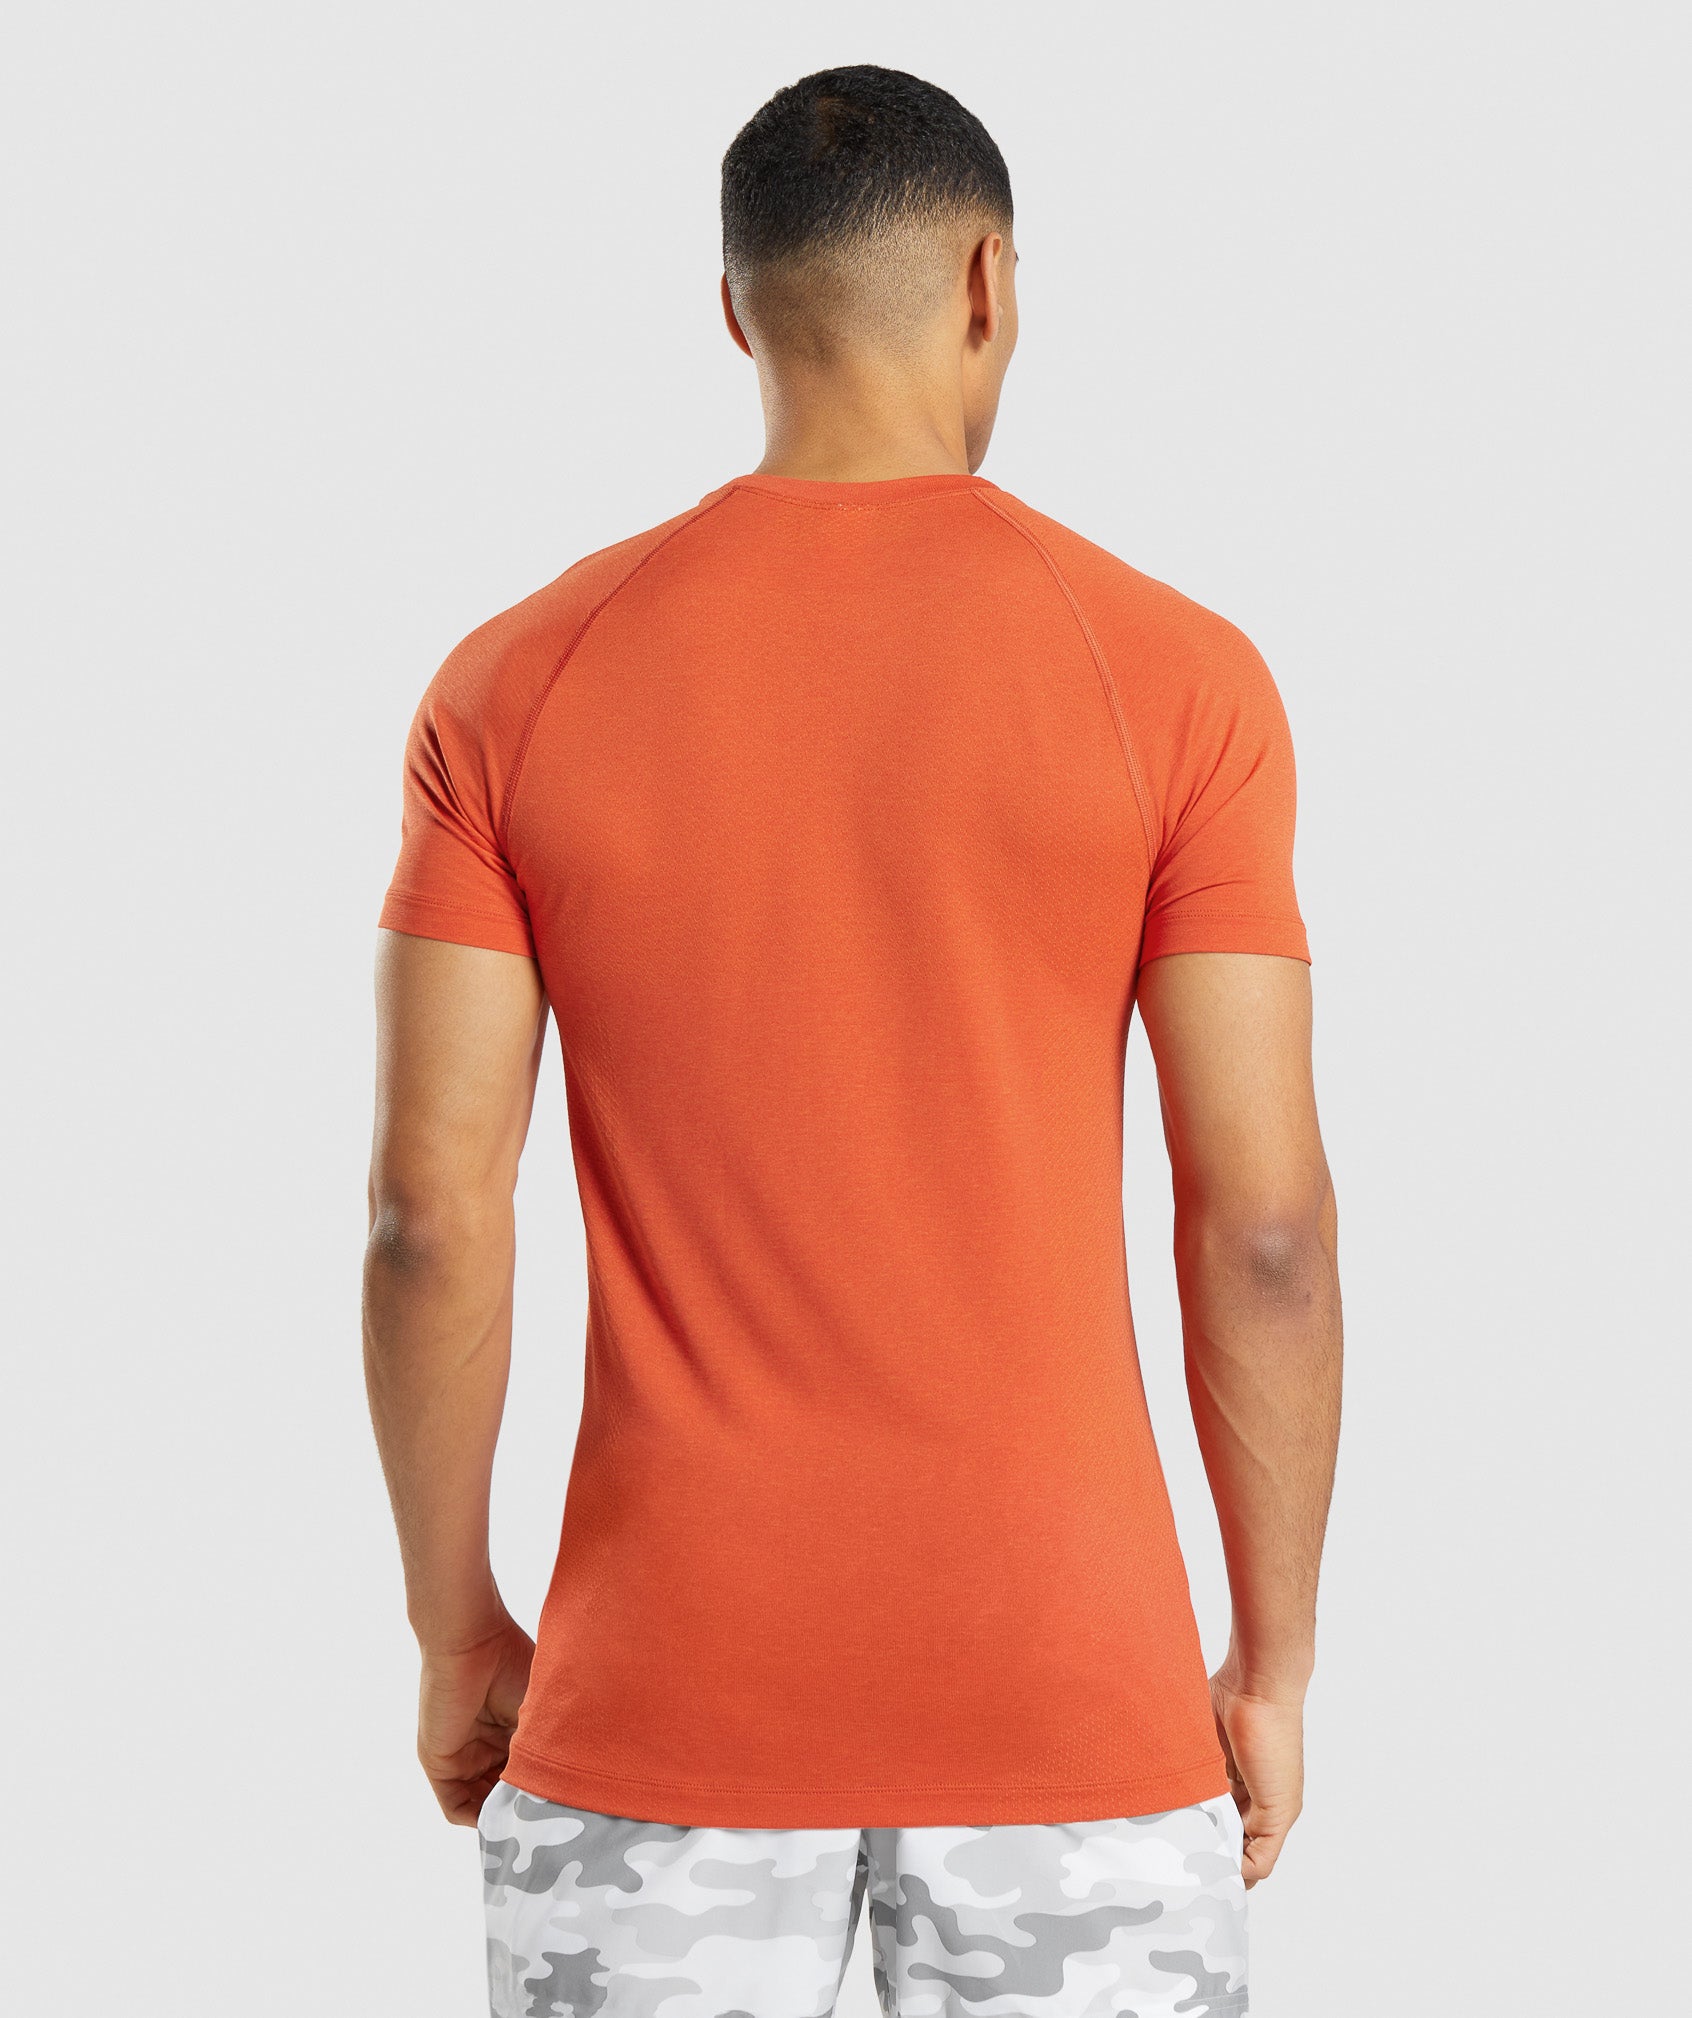 Vital Light Seamless T-Shirt in Papaya Orange Marl - view 2